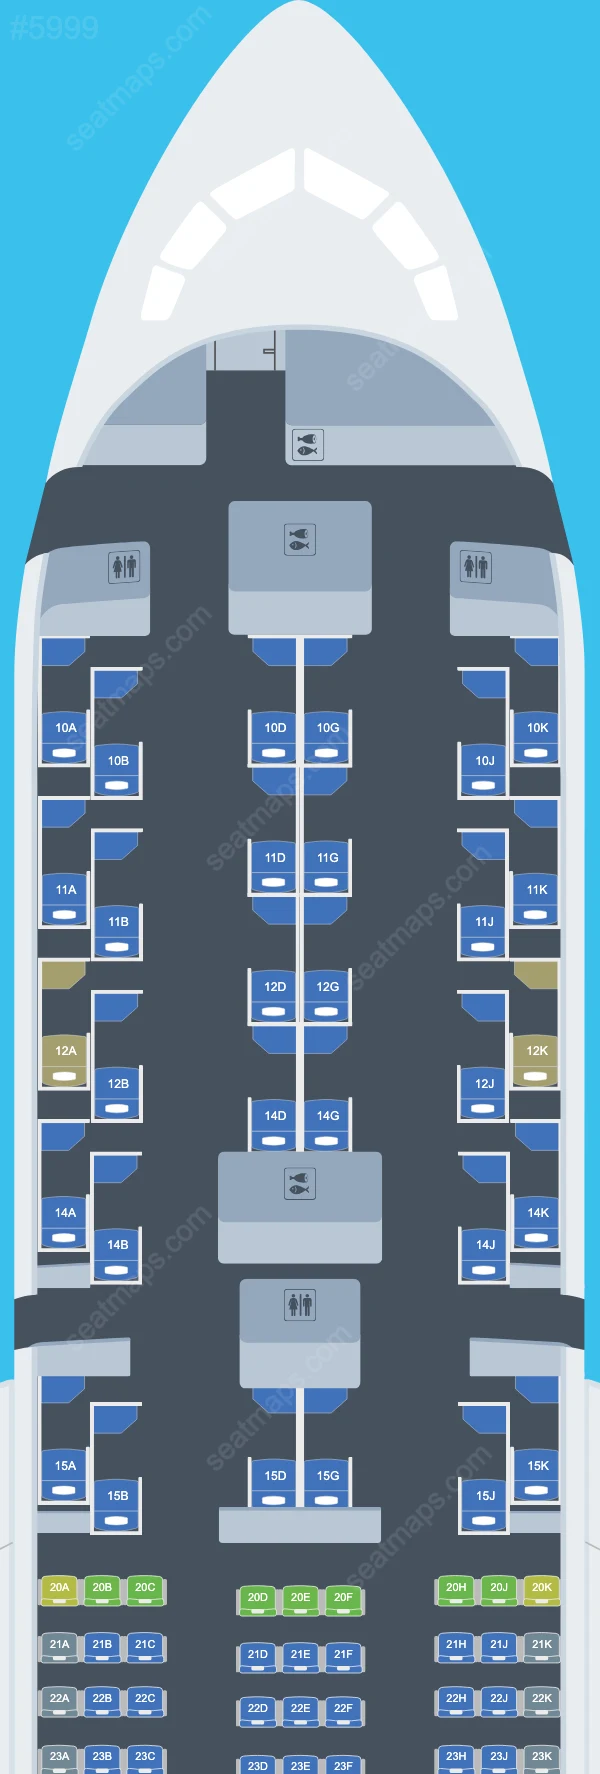 Oman Air Boeing 787 Seat Maps 787-9 V.1